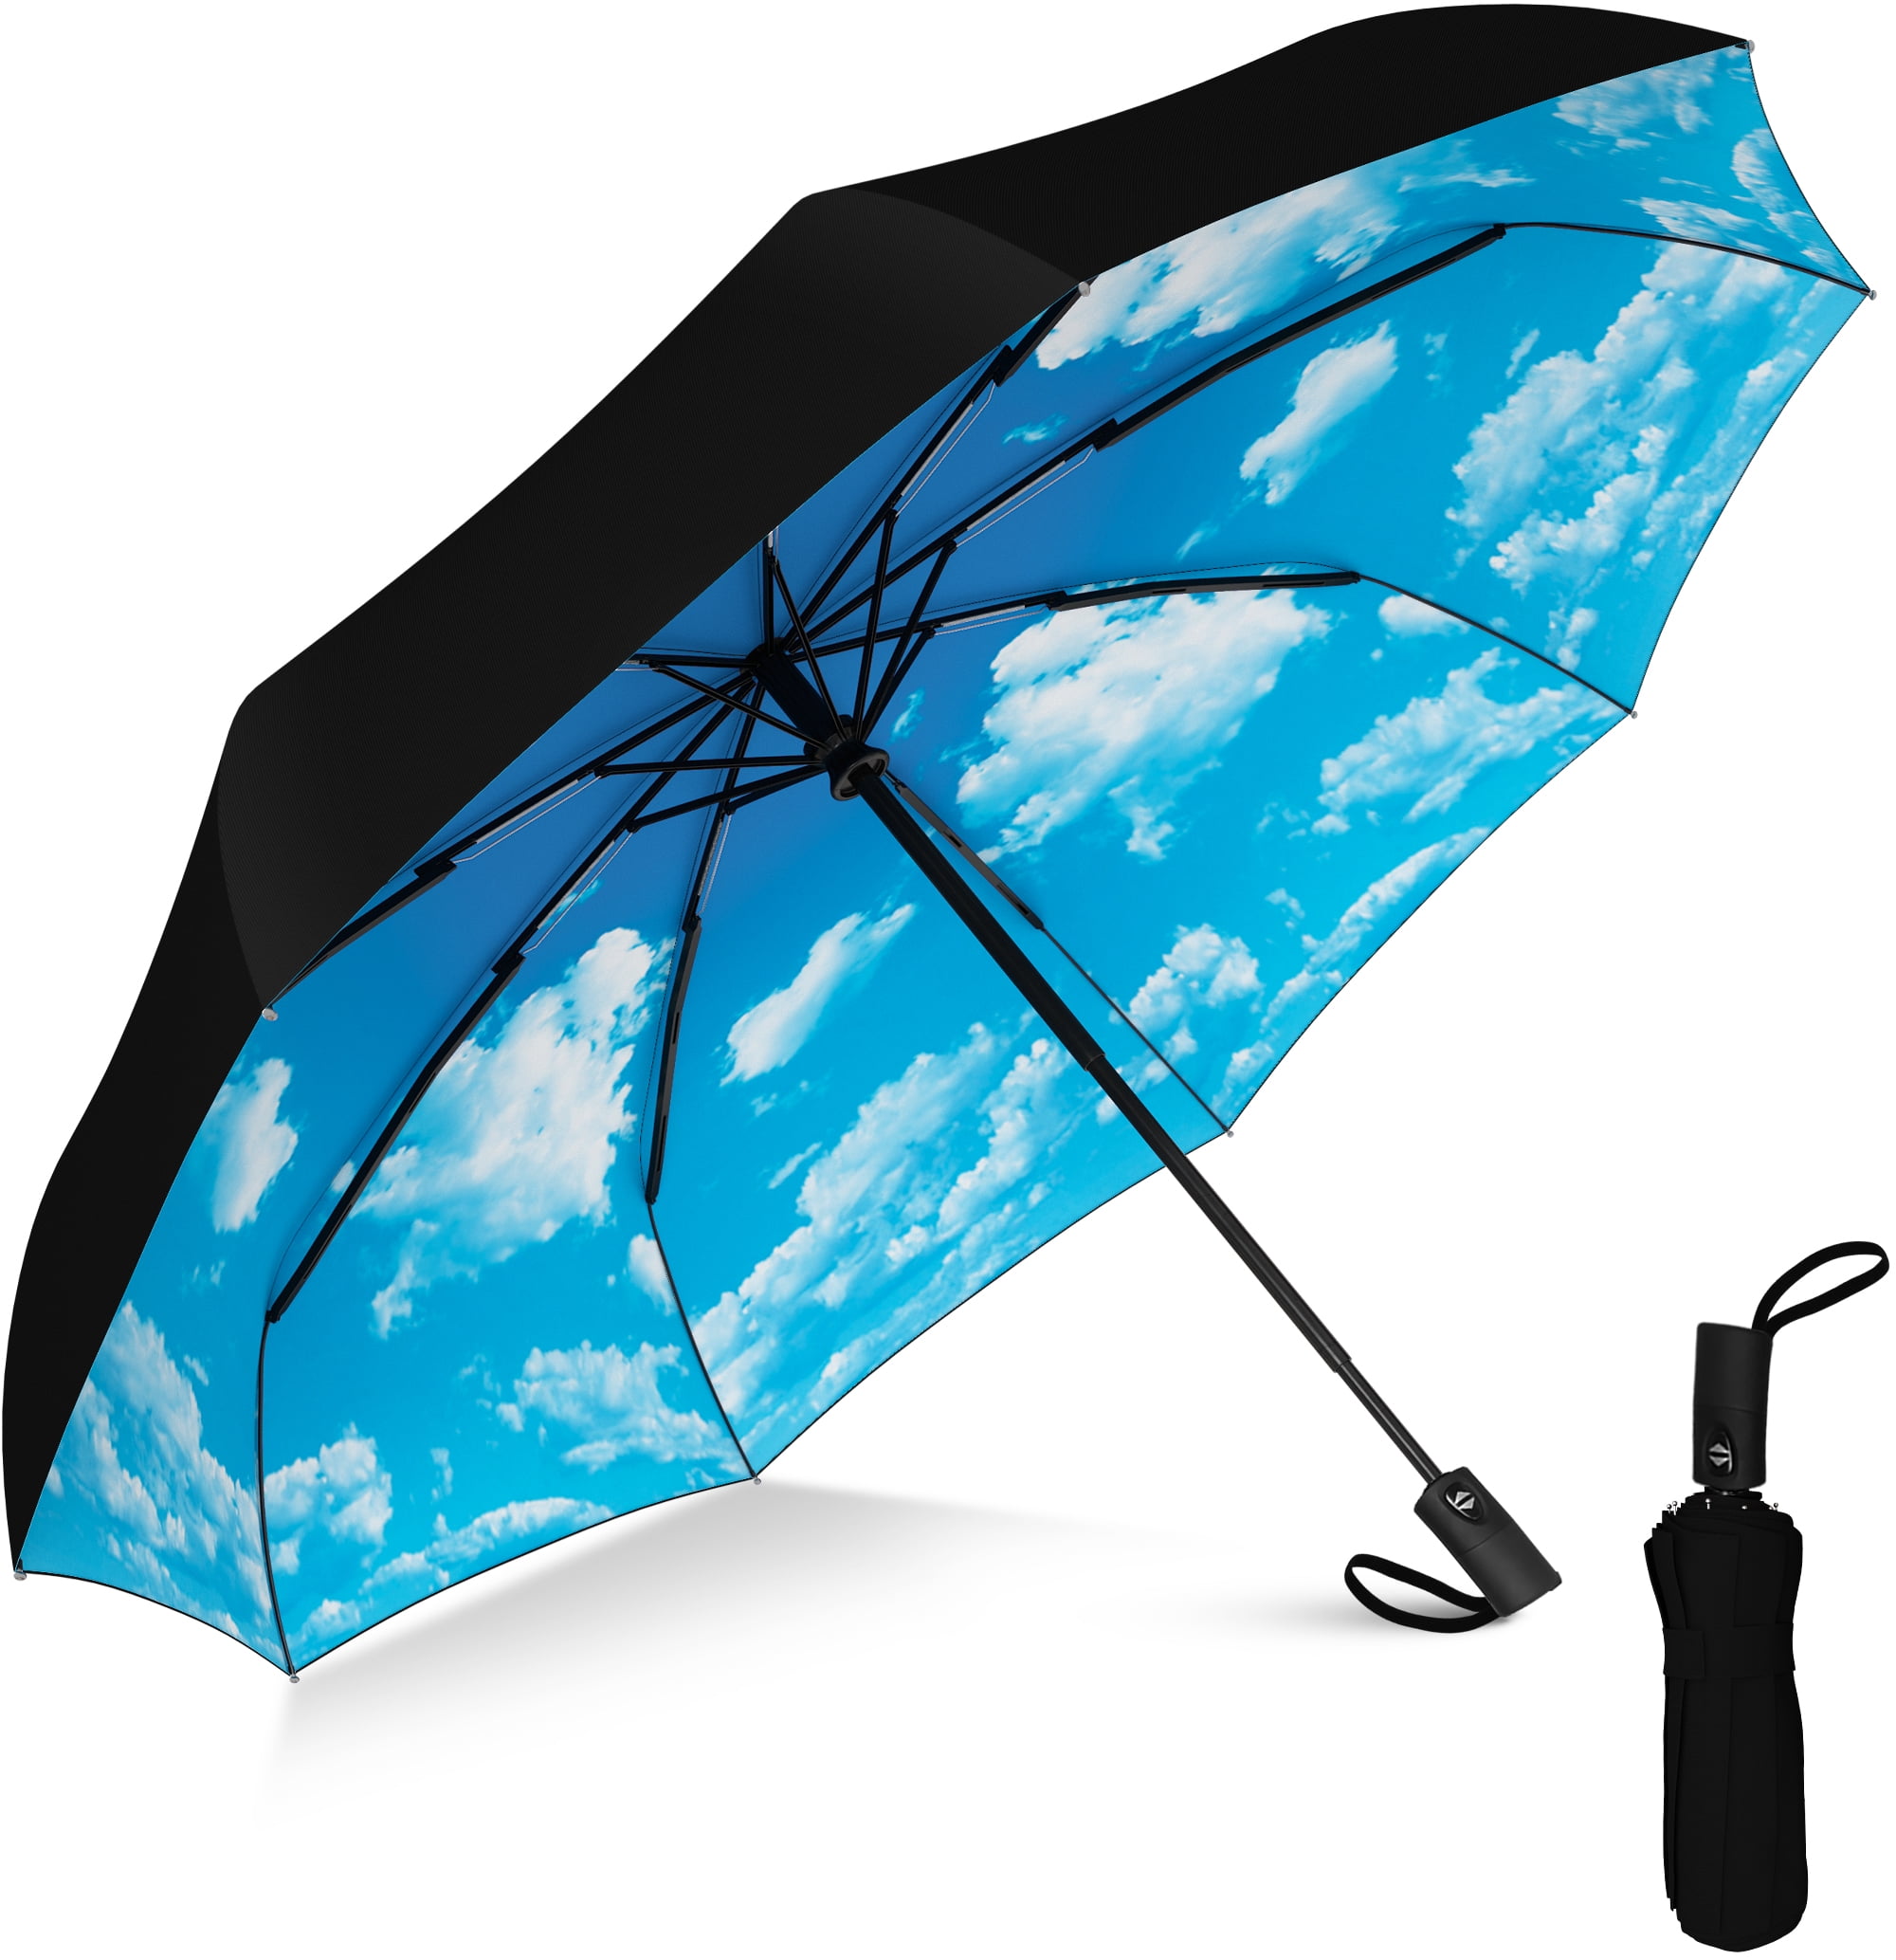 Windproof Reinforced Canopy Ergonomic Handle Auto Open/Close Multiple Colors Lilac Flower Compact Travel Umbrella